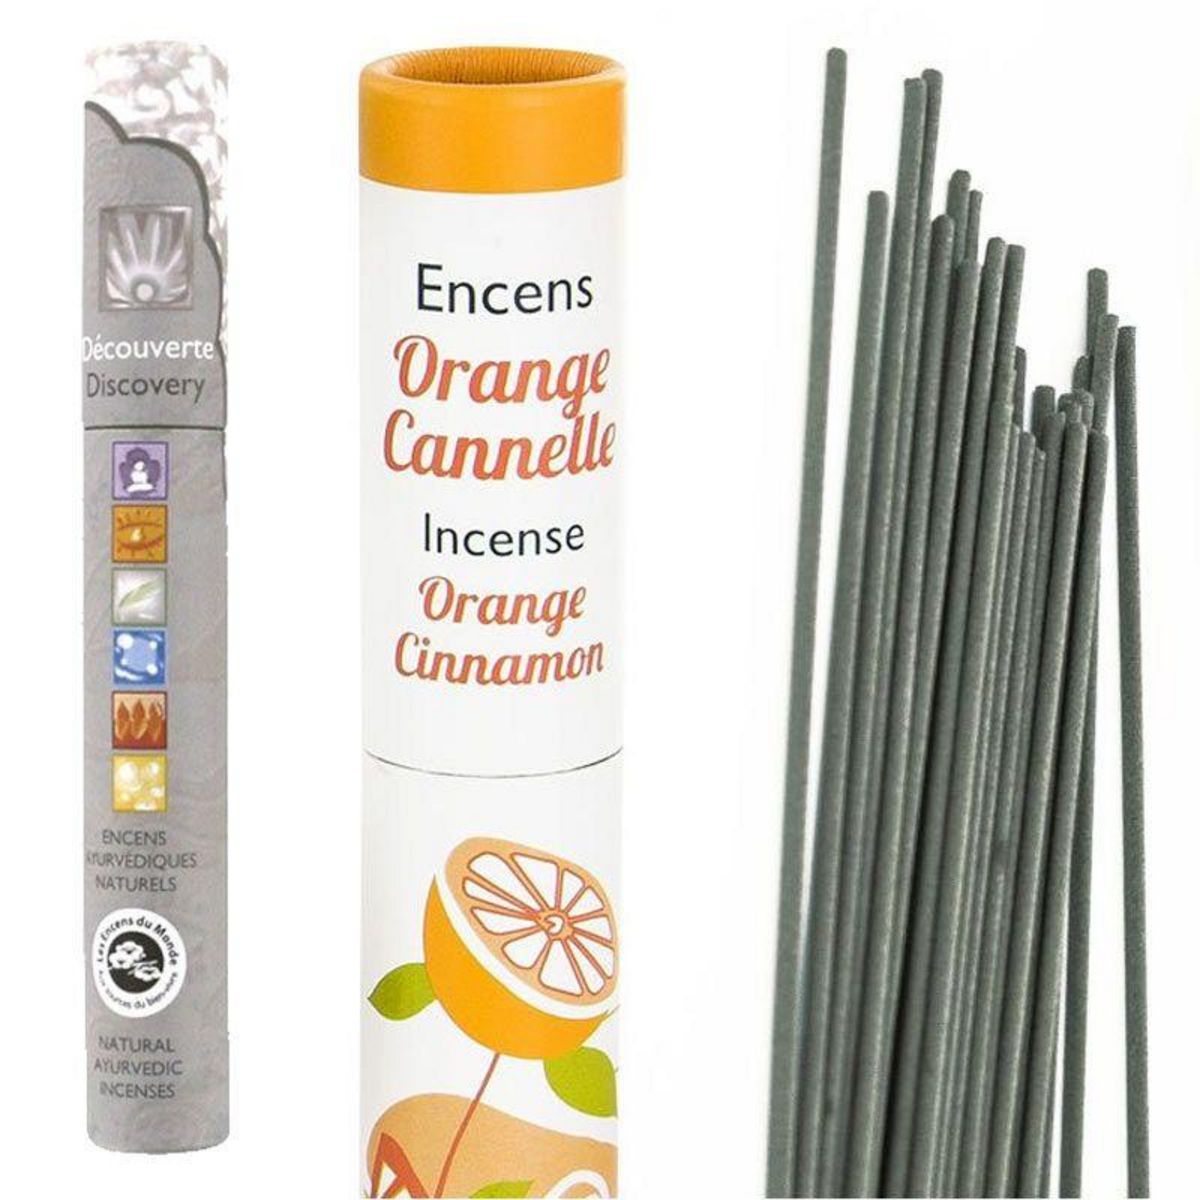 Les Encens du monde Encens Cannelle-Orange 30 bâtonnets + encens ayurvédique 14 bâtonnets